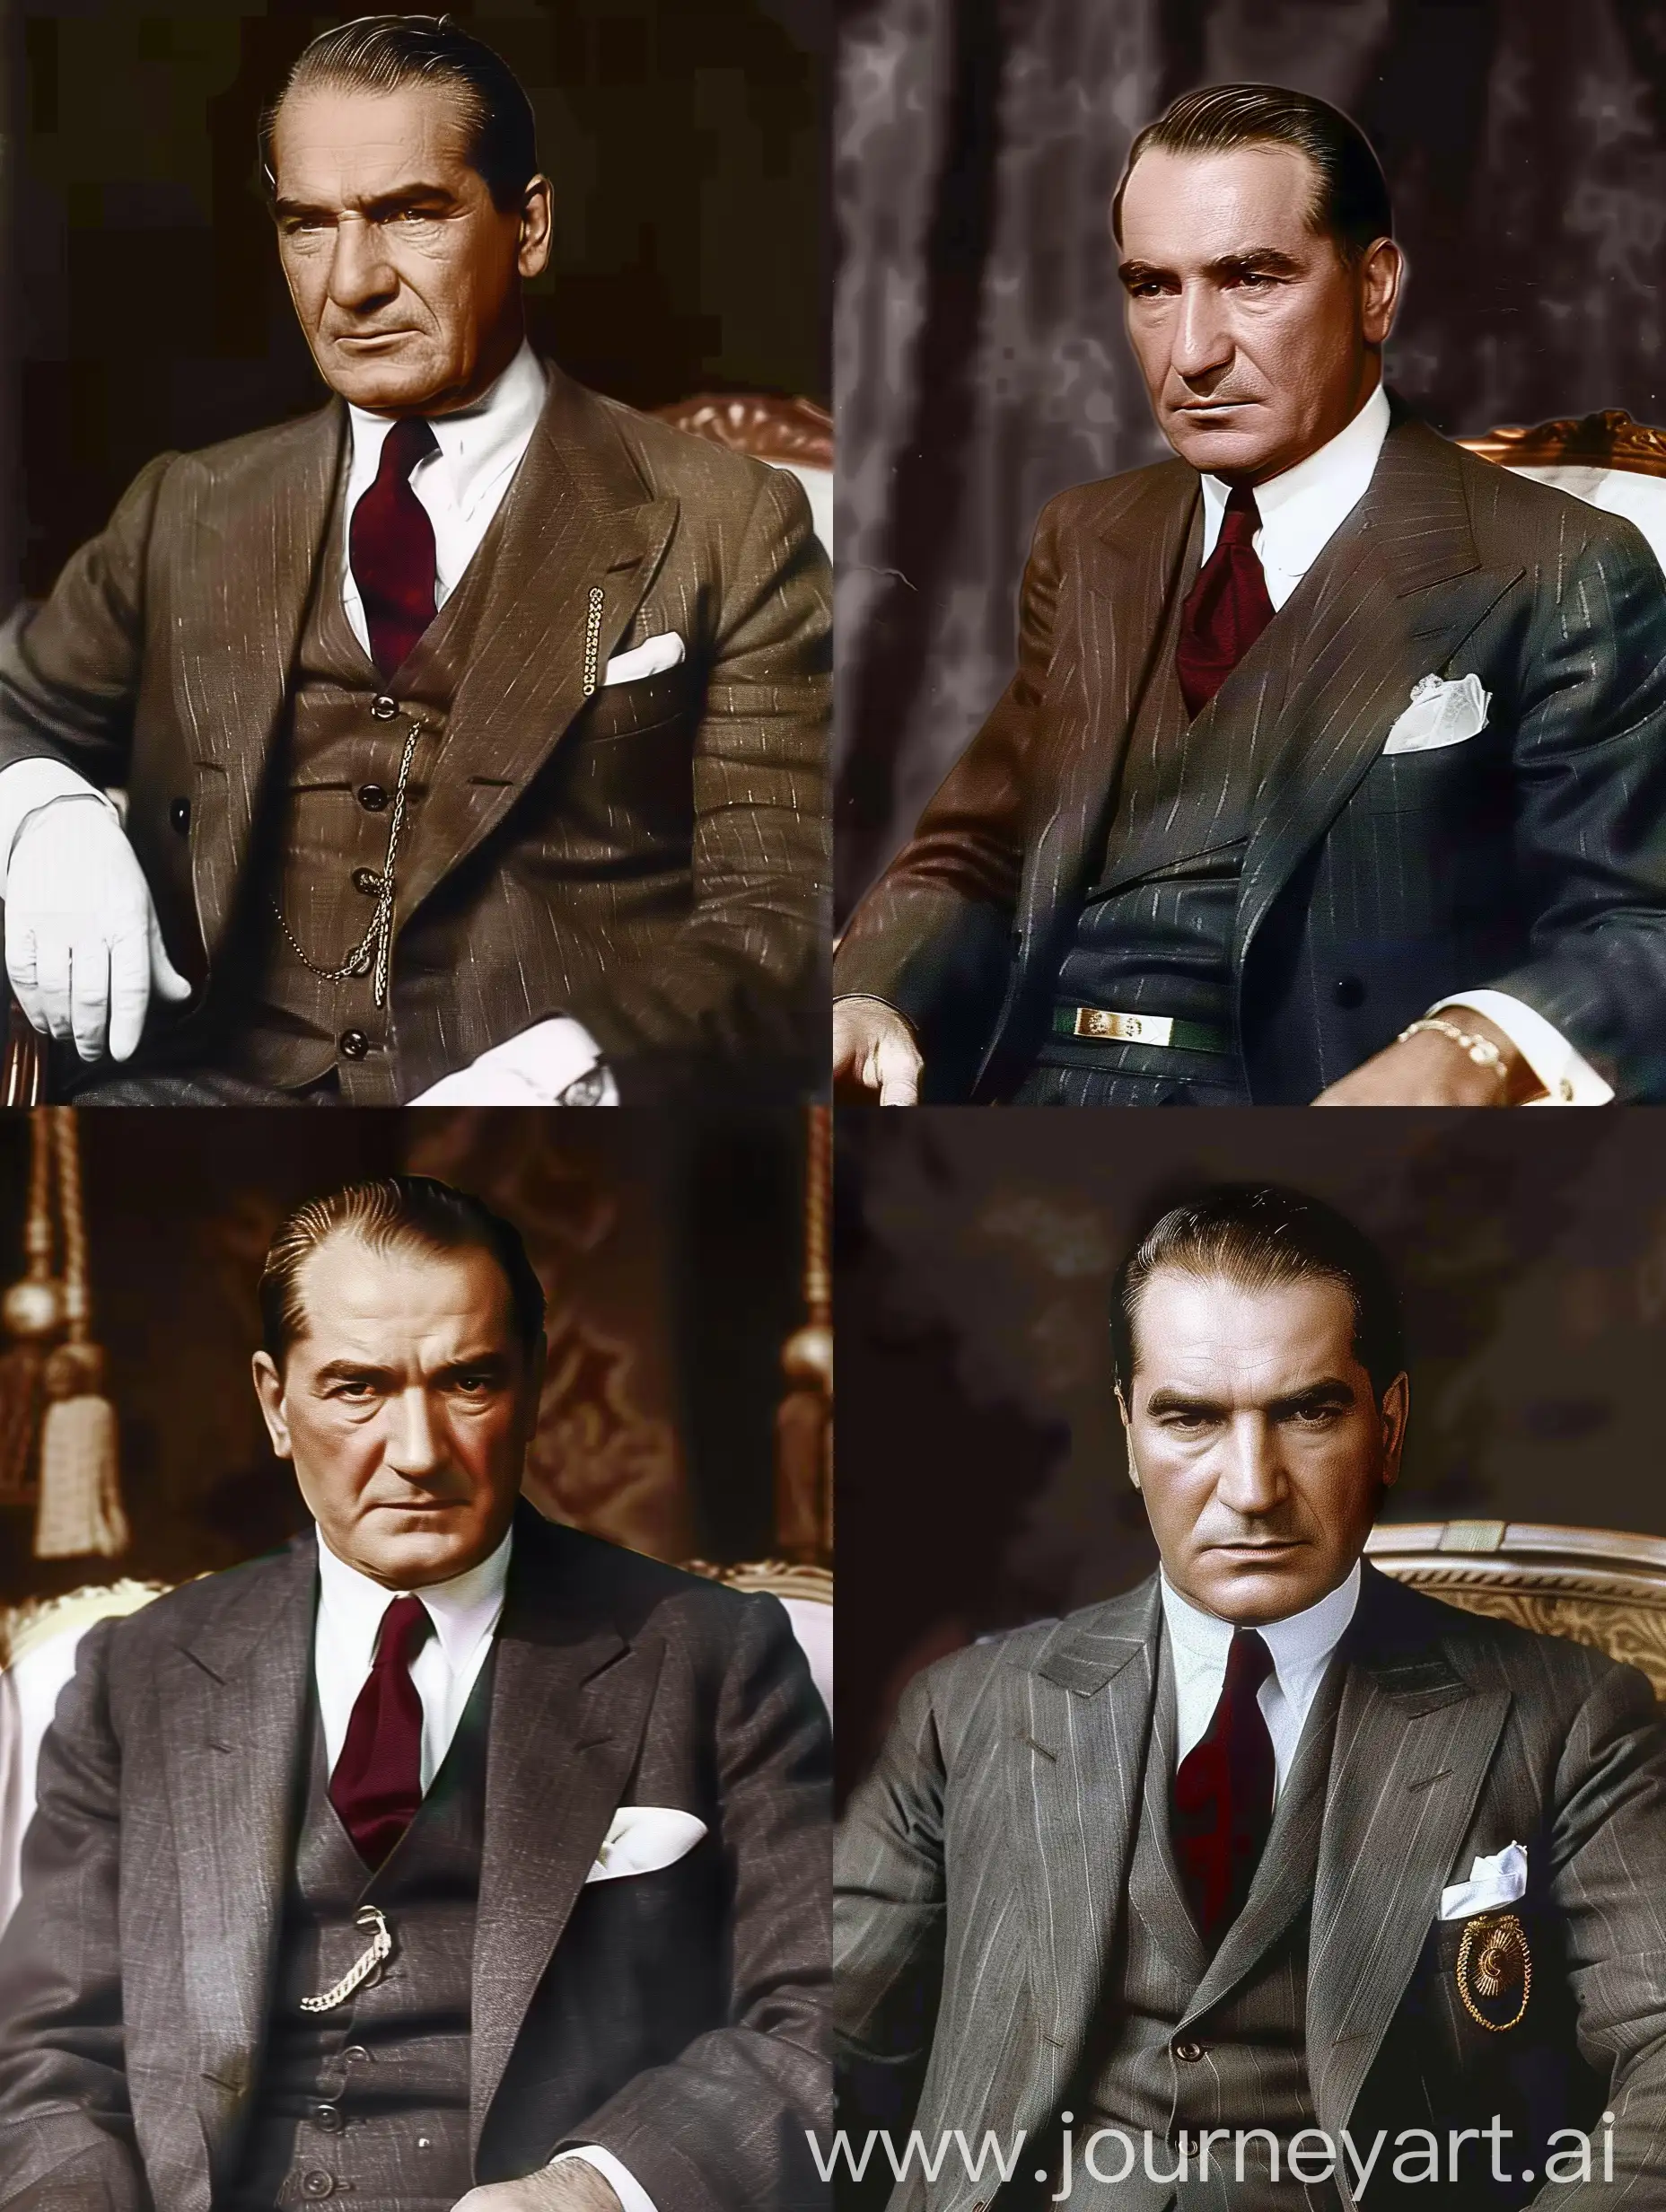 Mustafa Kemal Atatürk, depicted in fine suit, white
shirt, dark red tie, slicked back hair, charismatic, colorized,
cinematic lighting